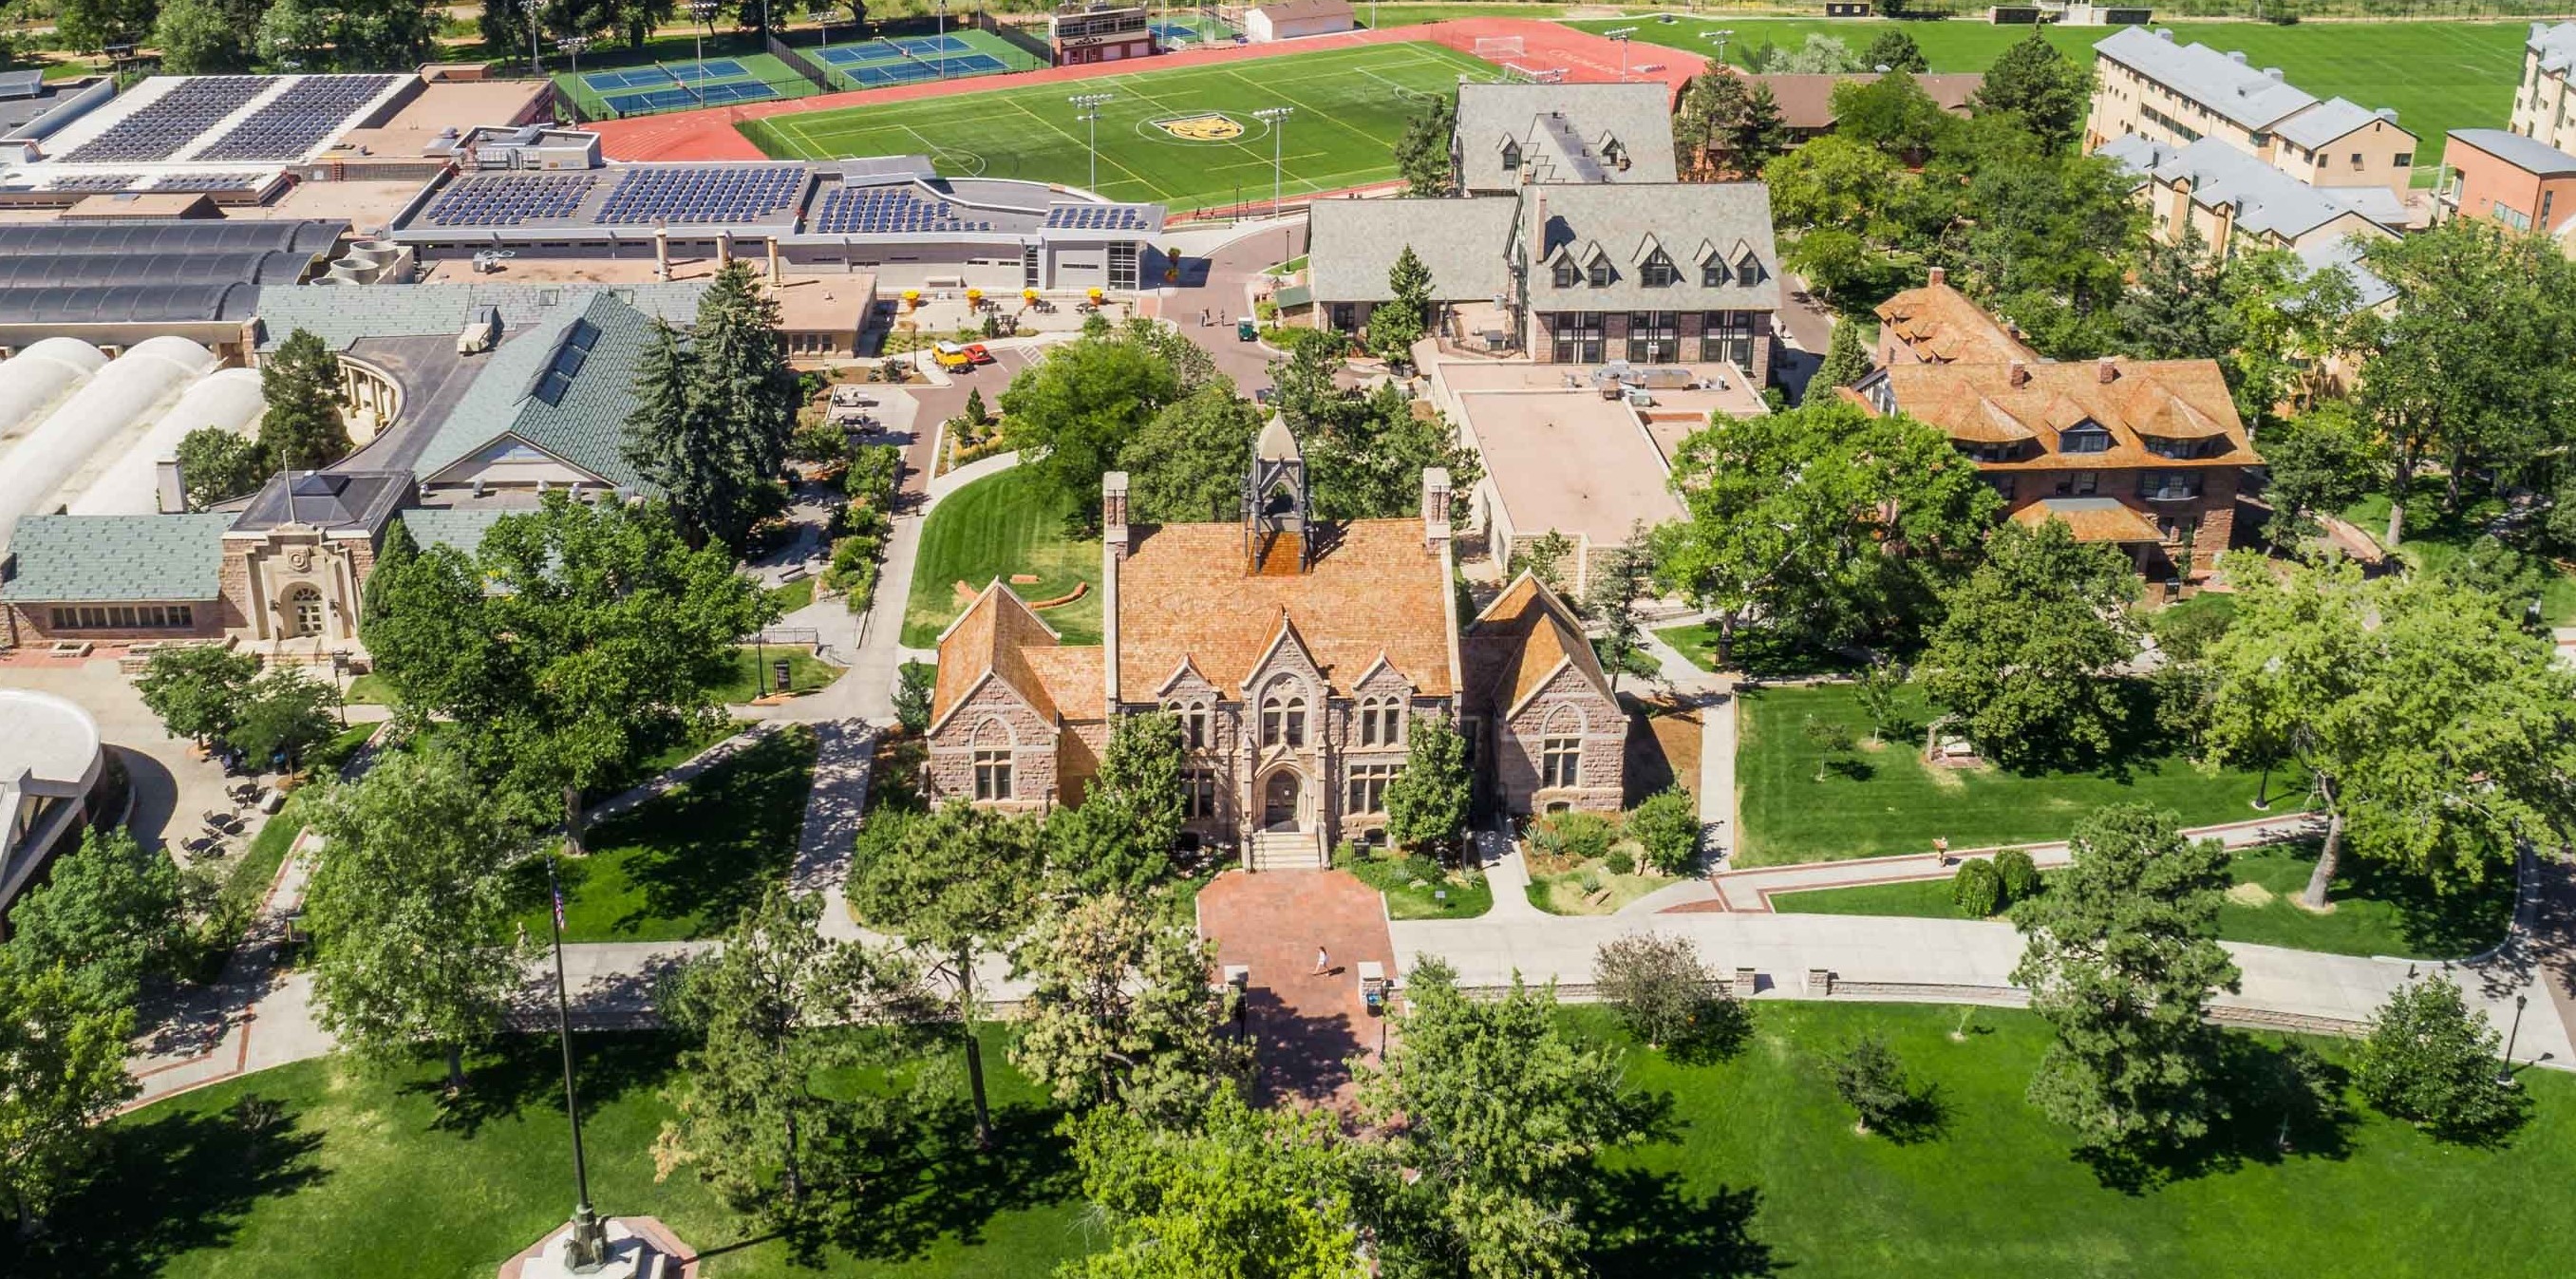 The PIFP succeeds as a mutual partnership between Colorado College and Colorado nonprofits